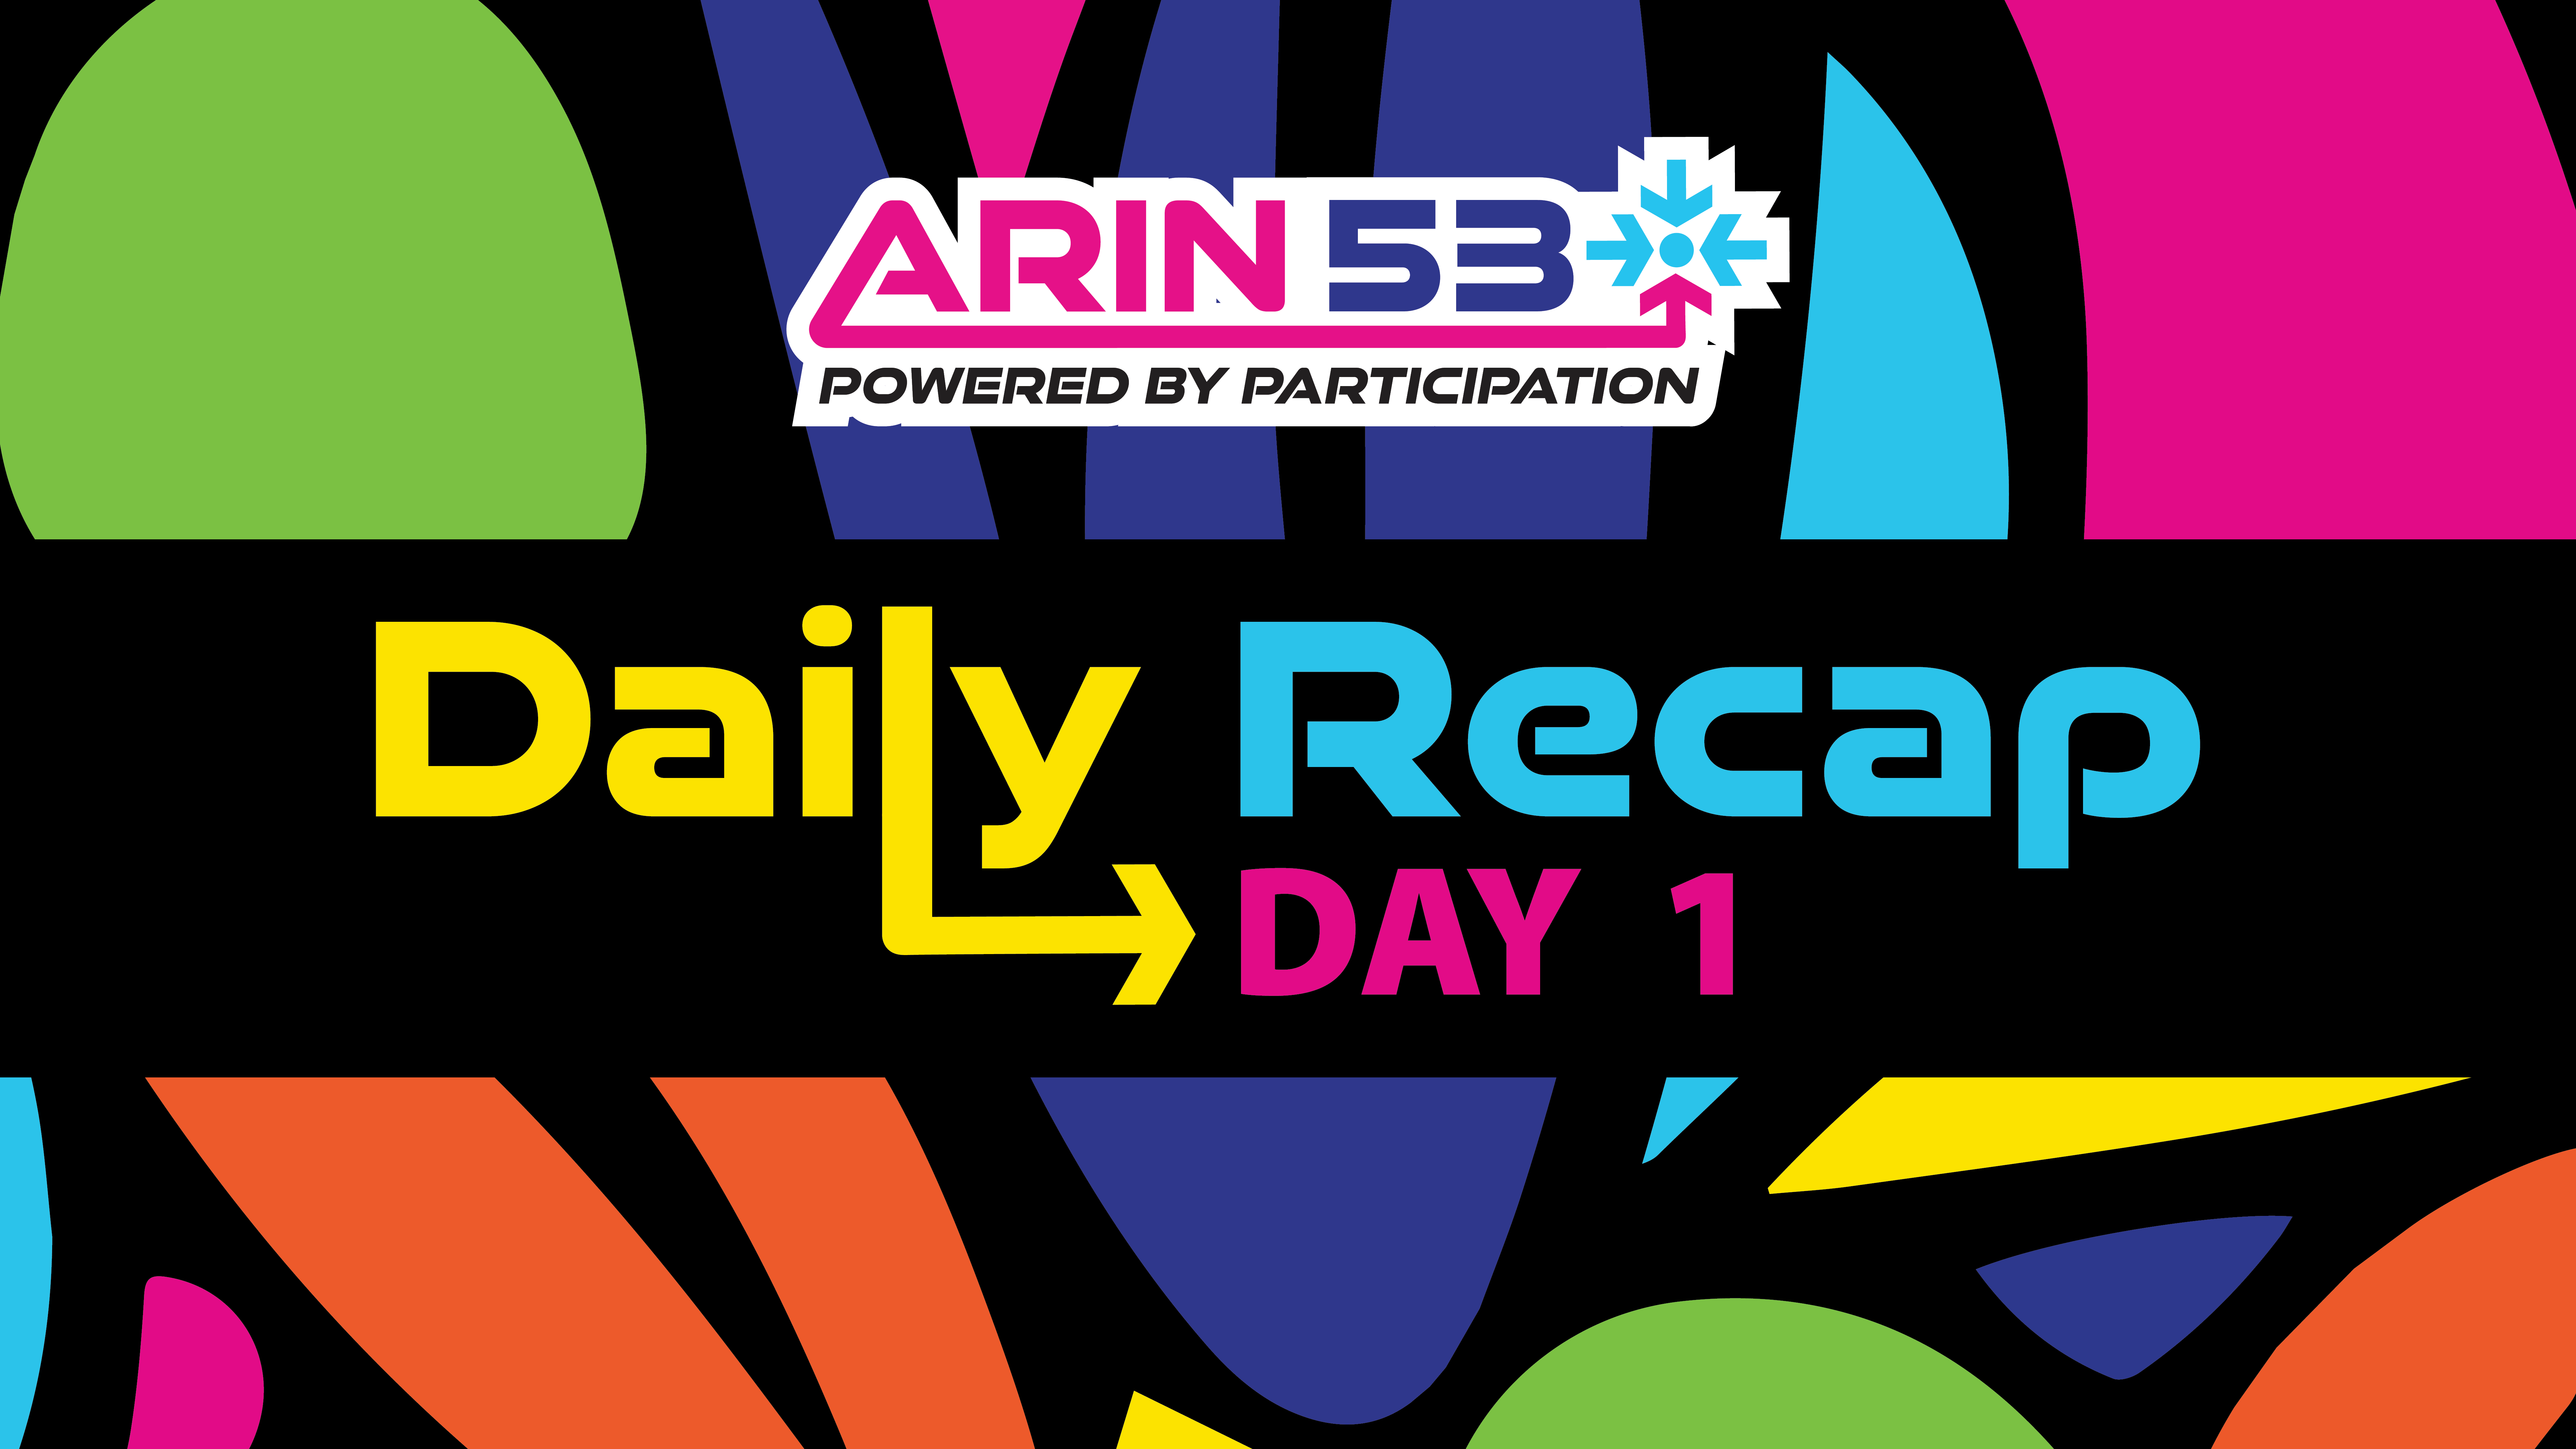 Read the blog ARIN 53 Day 1 Recap